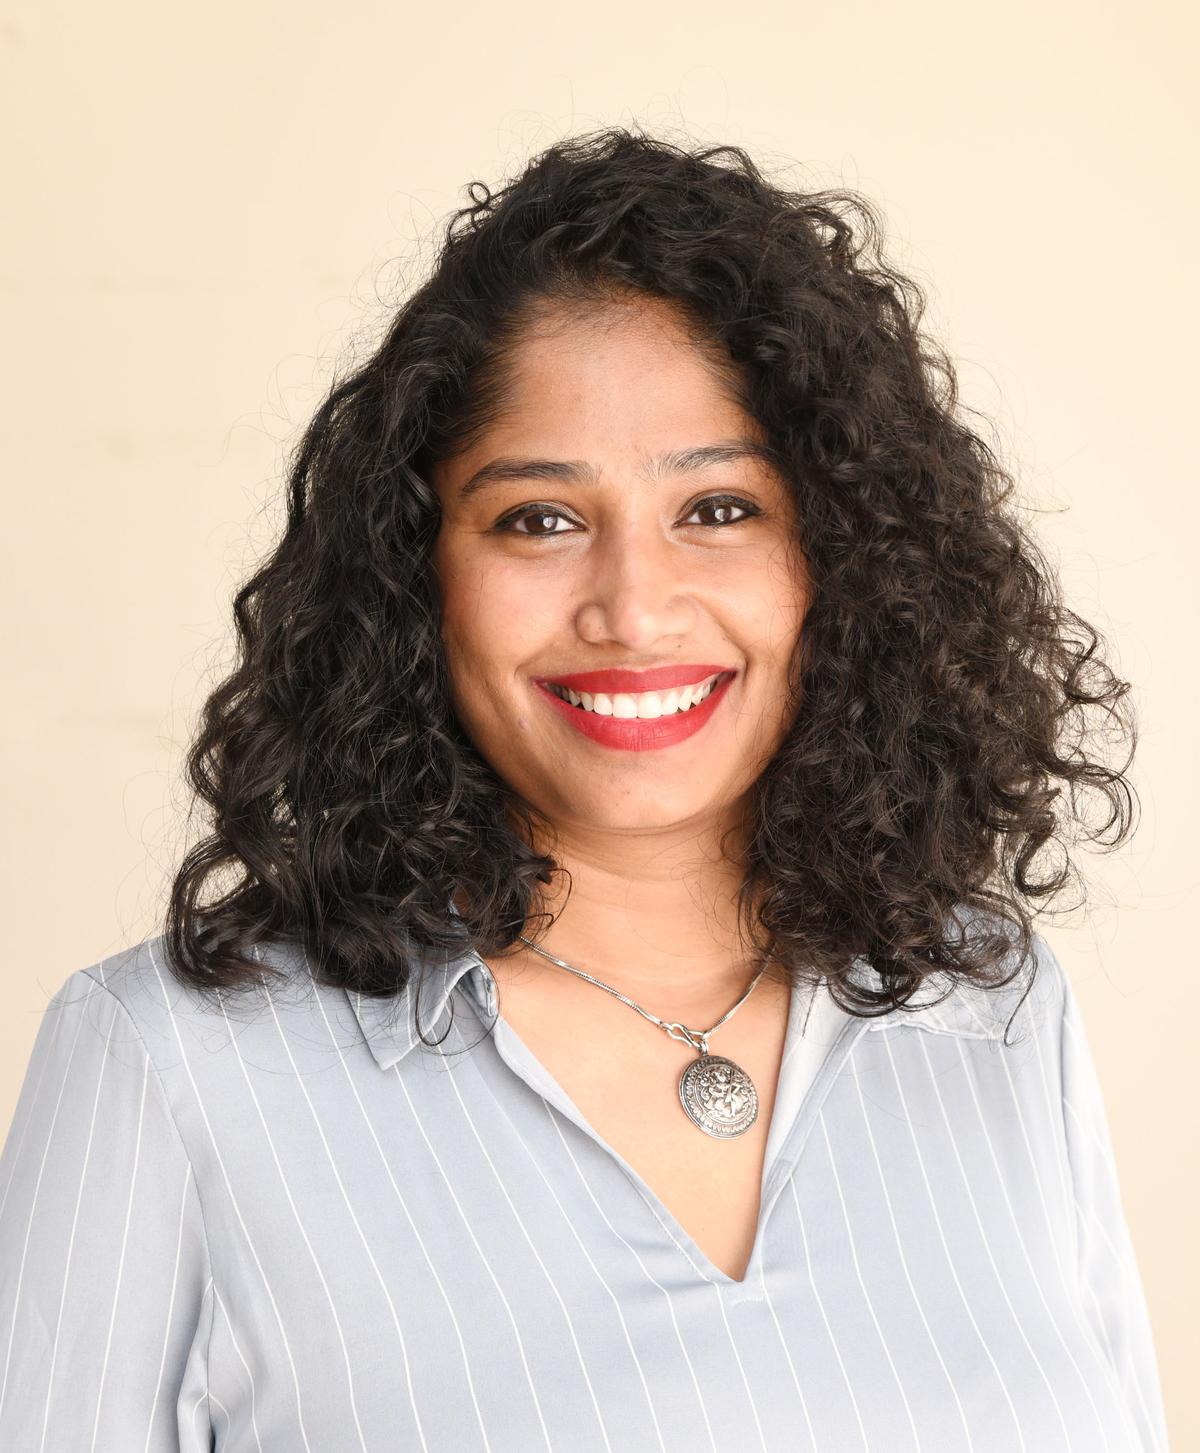 Preetika Mathew, editor-in-charge, WatchTime India